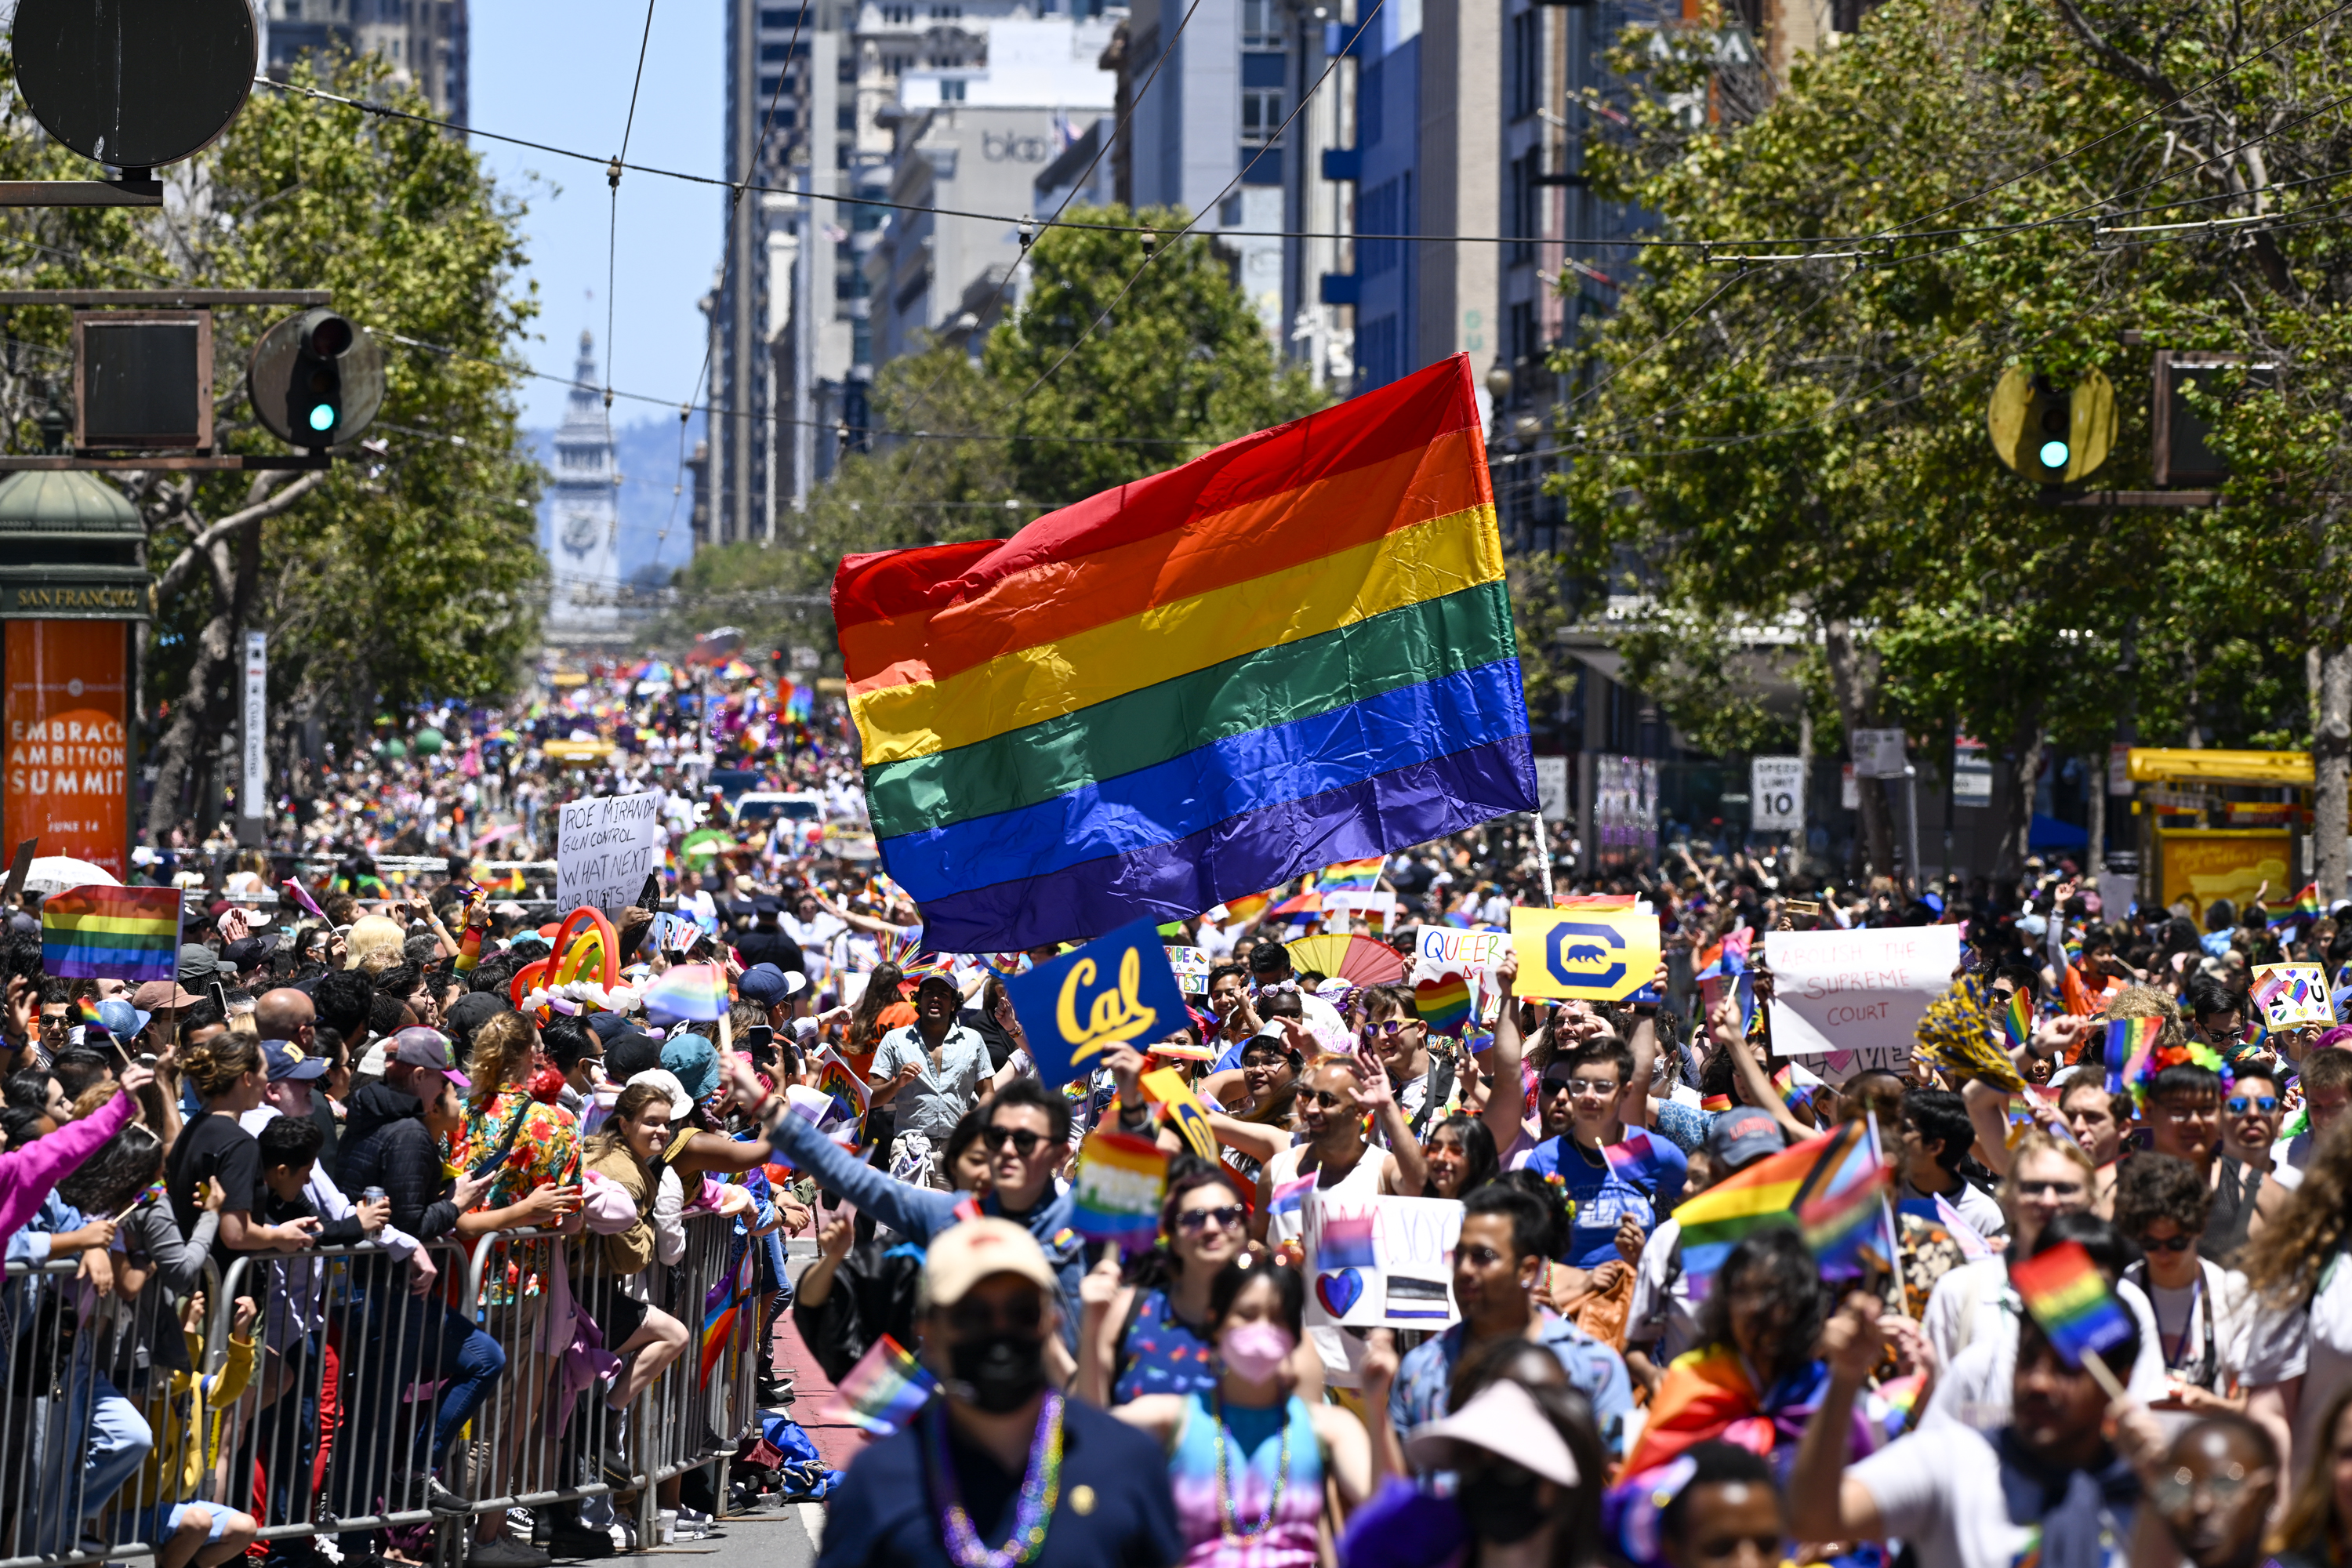 Pride Month LGBTQ Can You Name That LGBTQ Flag Quiz. Digital 